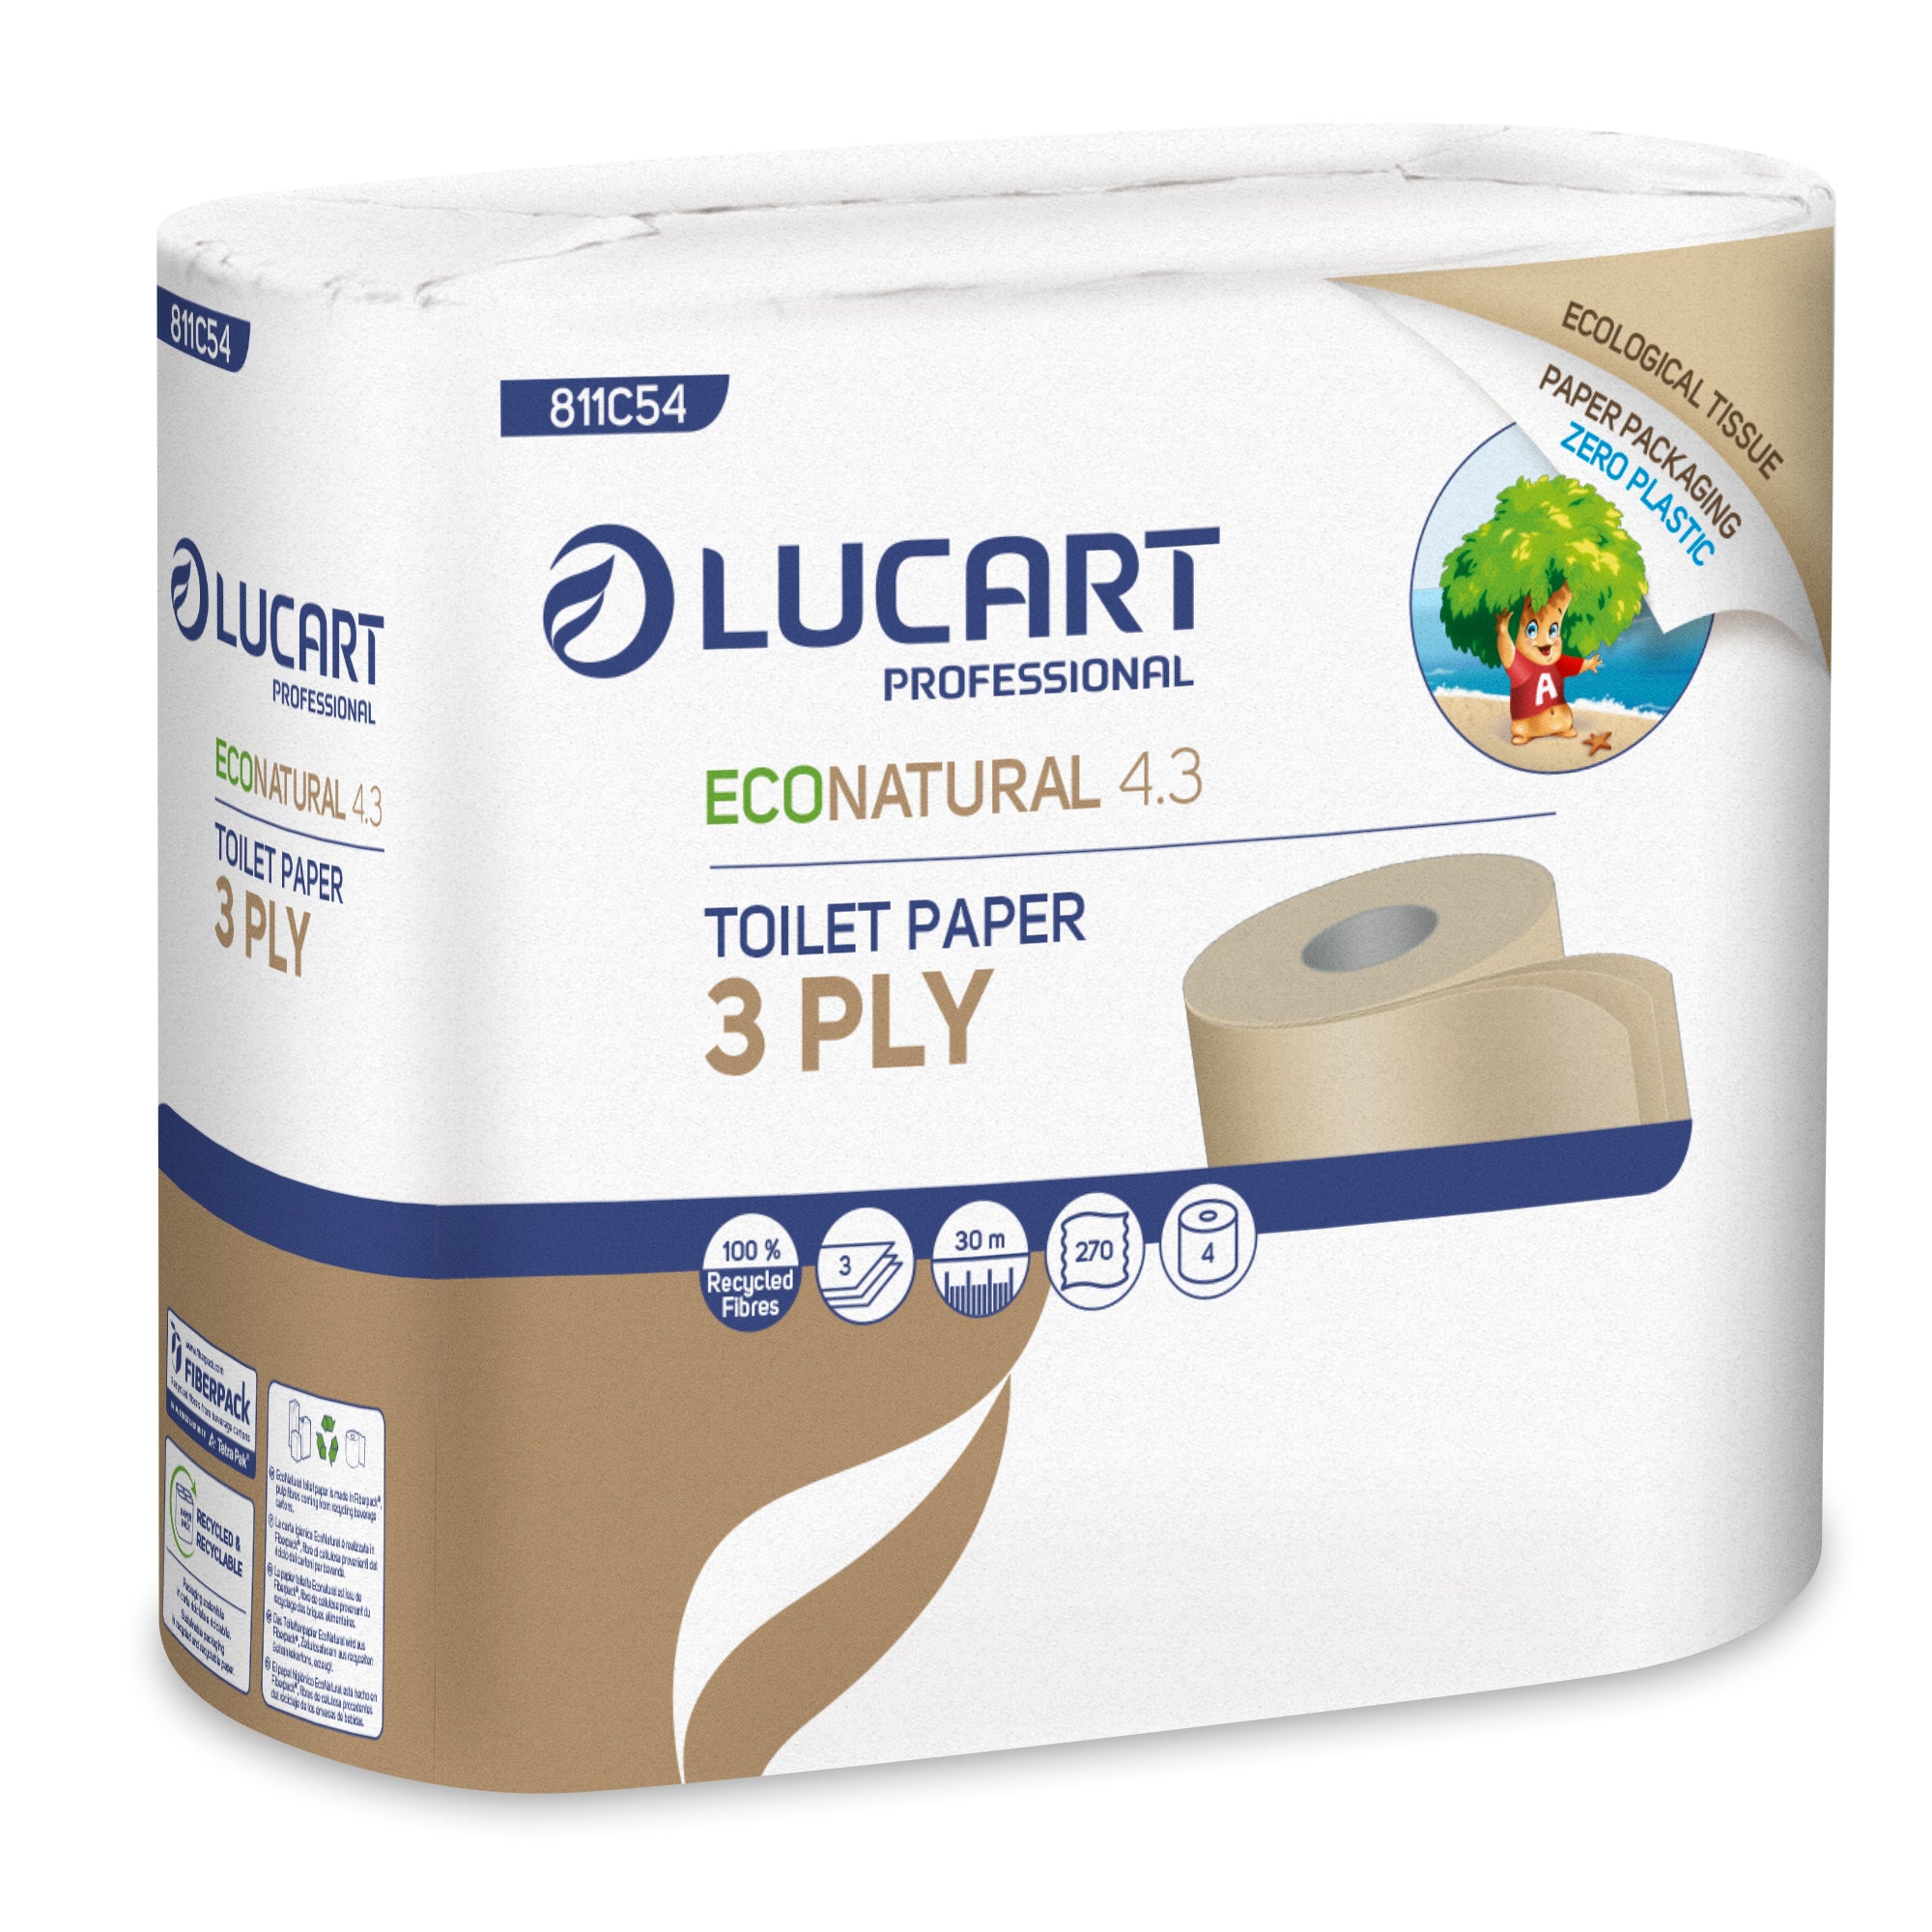 lucart-pacco-4-rotoli-carta-igienica-270-strappi-econatural-4-3-plastic-free